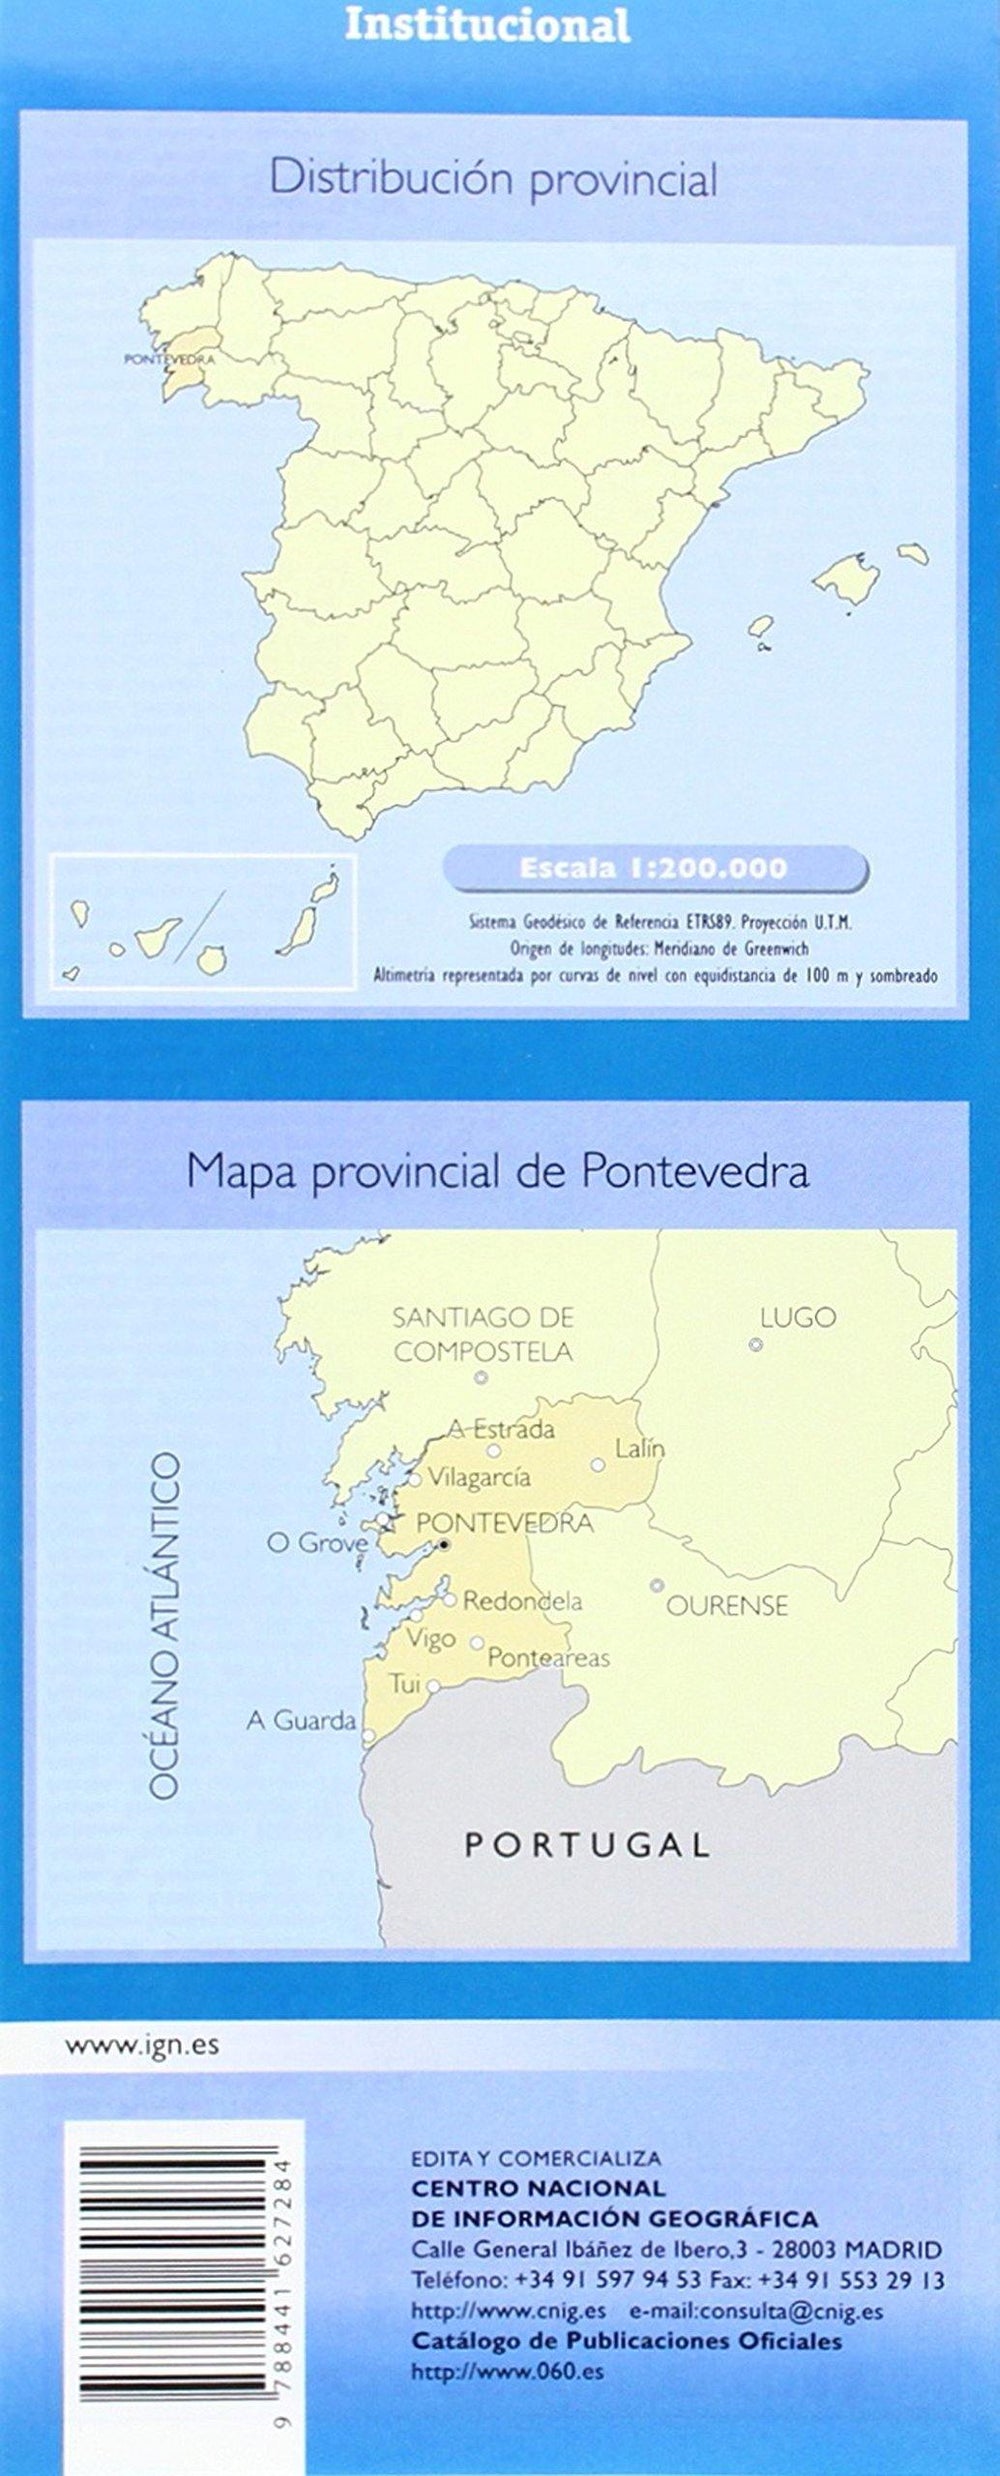 Carte routière provinciale - Pontevedra (Galice, Espagne), n° 36 | CNIG carte pliée CNIG 